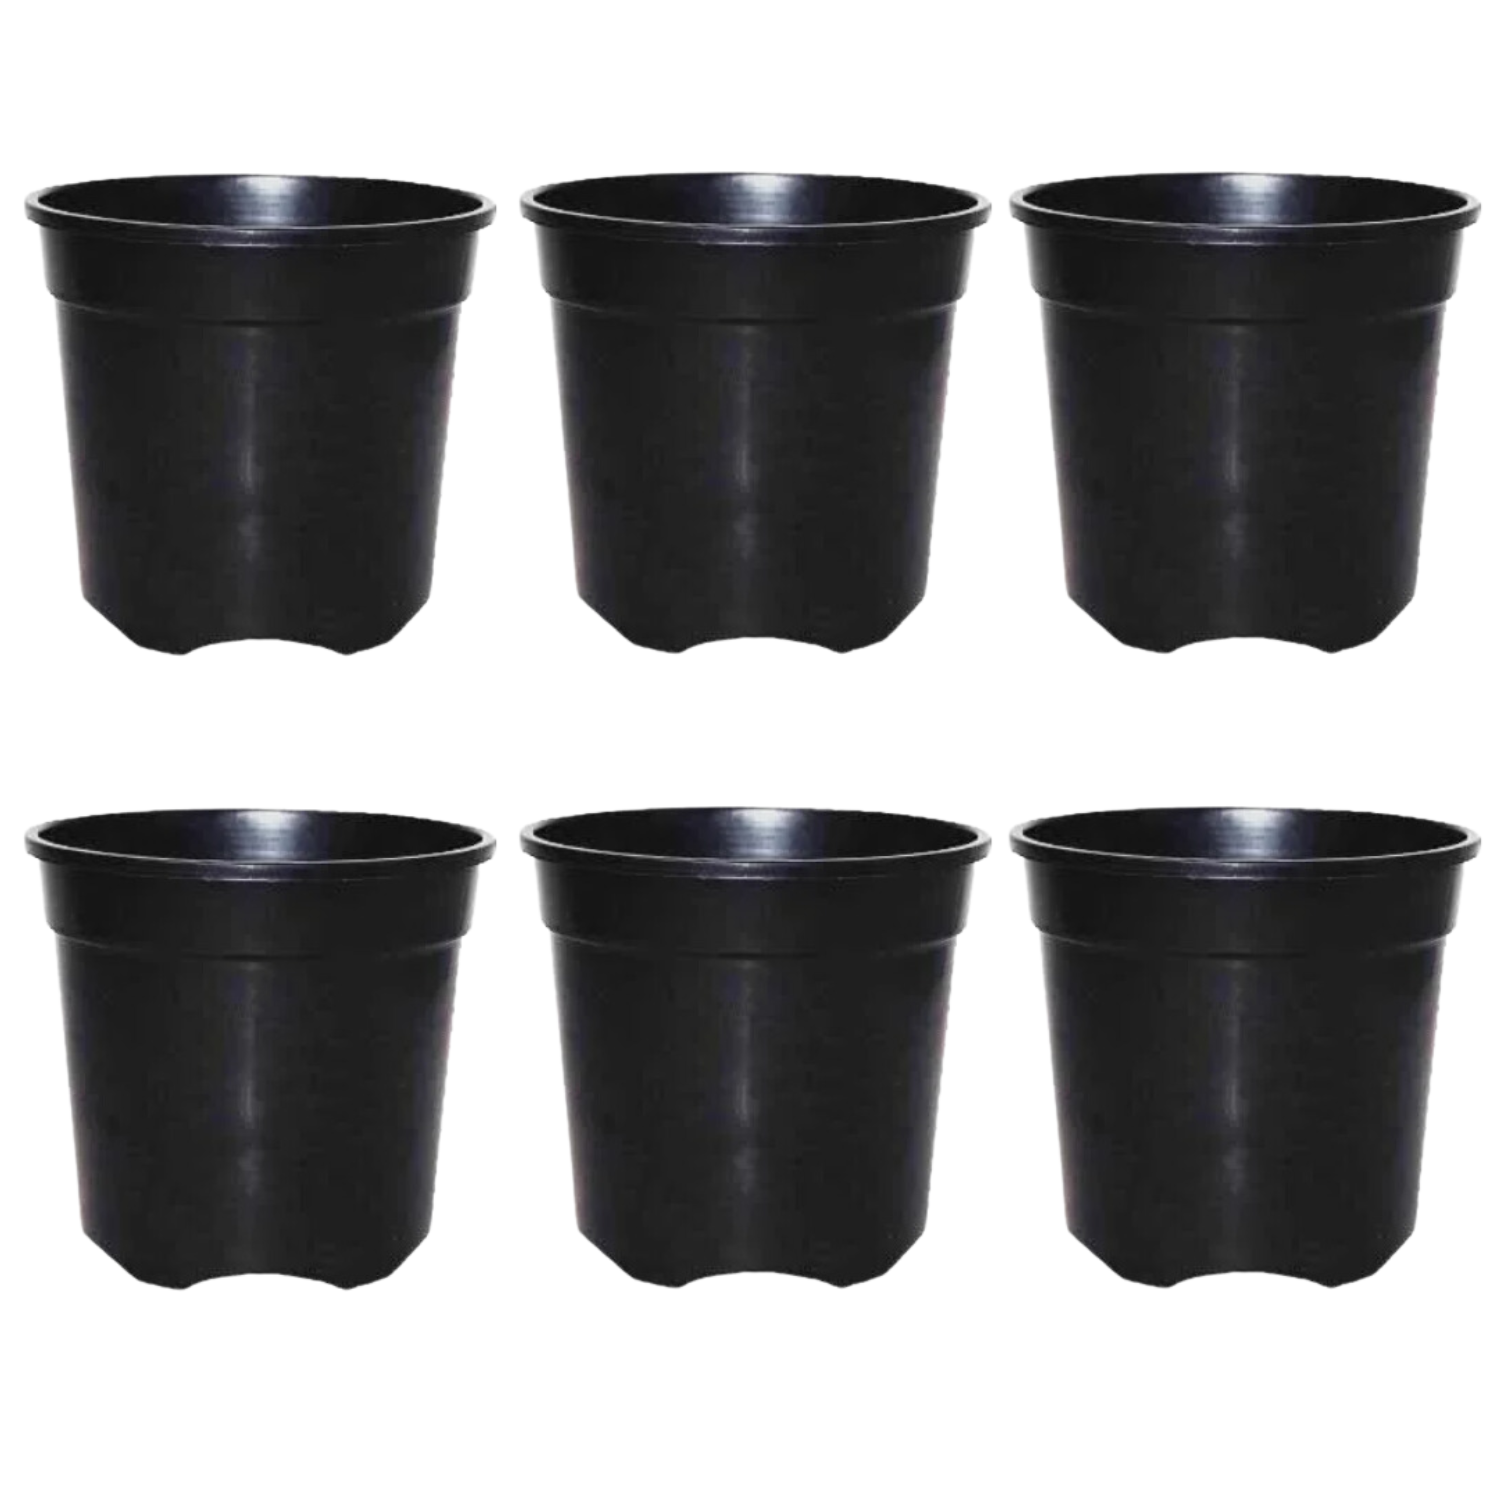 9 Inch Gro Pro Grower Plastic Pot for Home & Garden